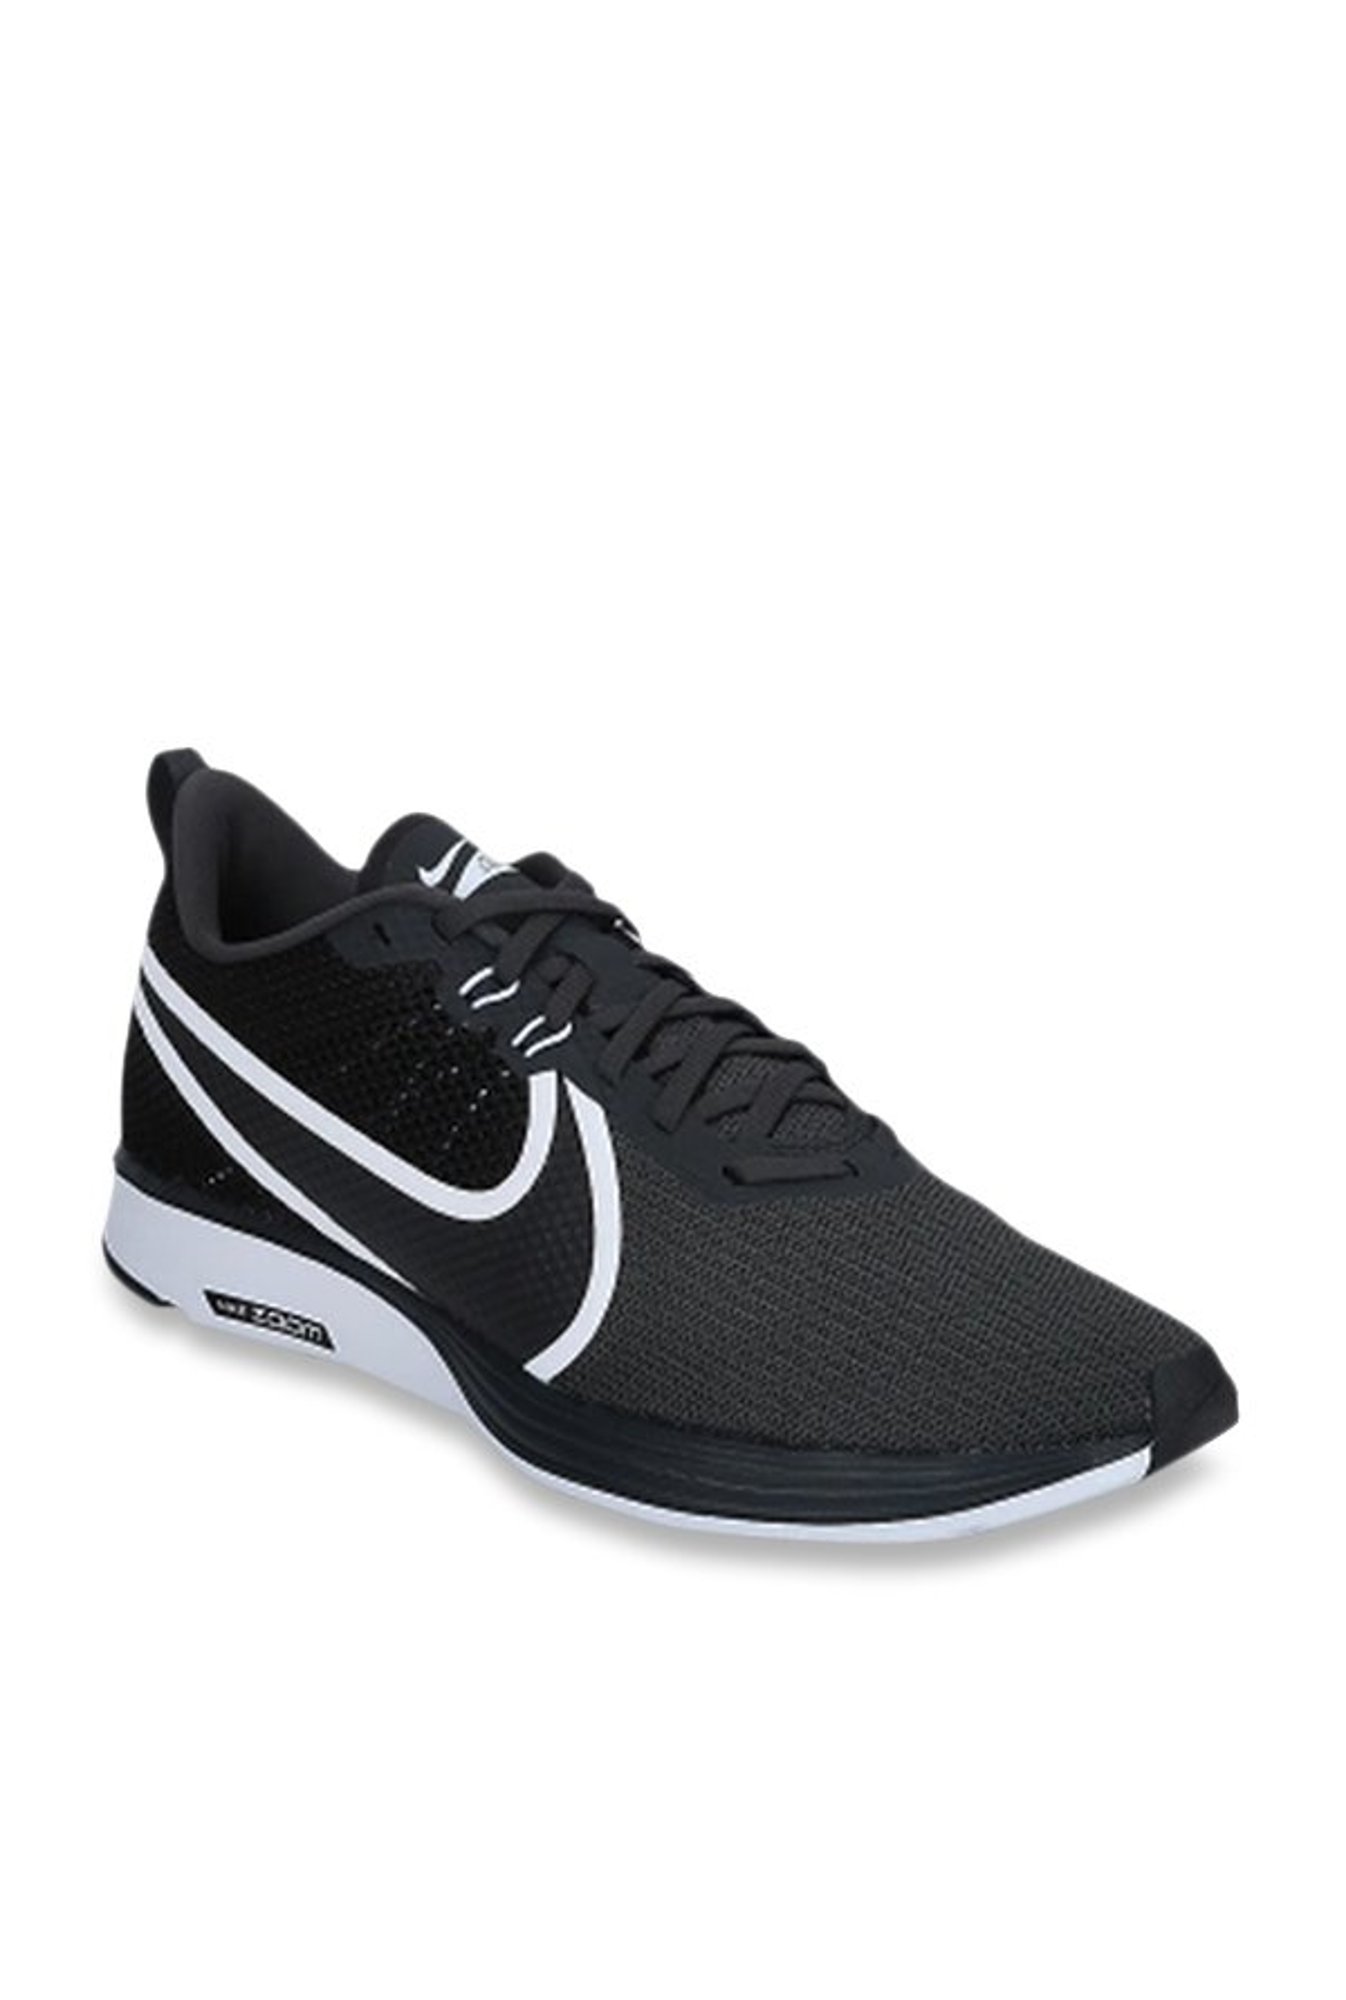 Buy Nike Zoom Strike 2 Dark Grey 